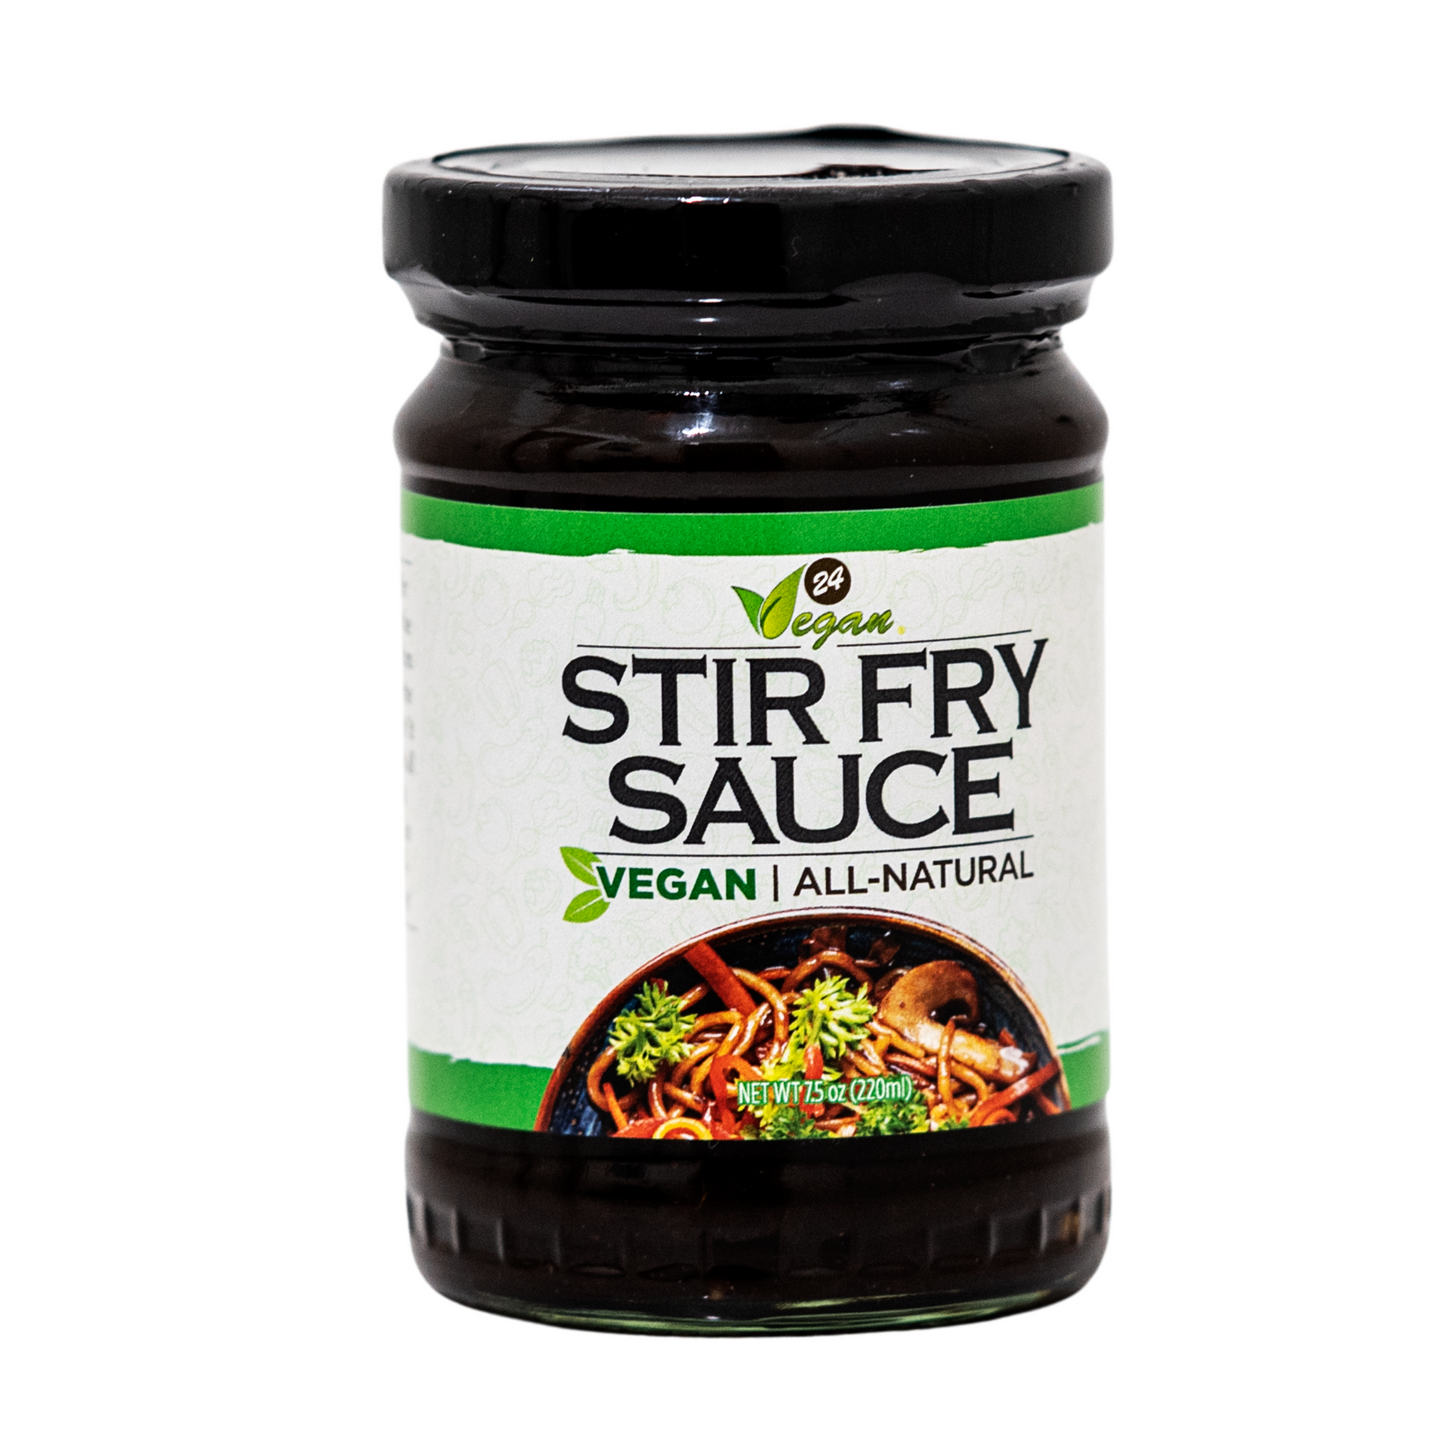 Vegan Stir Fry Sauce - 7.5oz - All Natural - Vegan - MSG Free - NON GMO - 3 pack